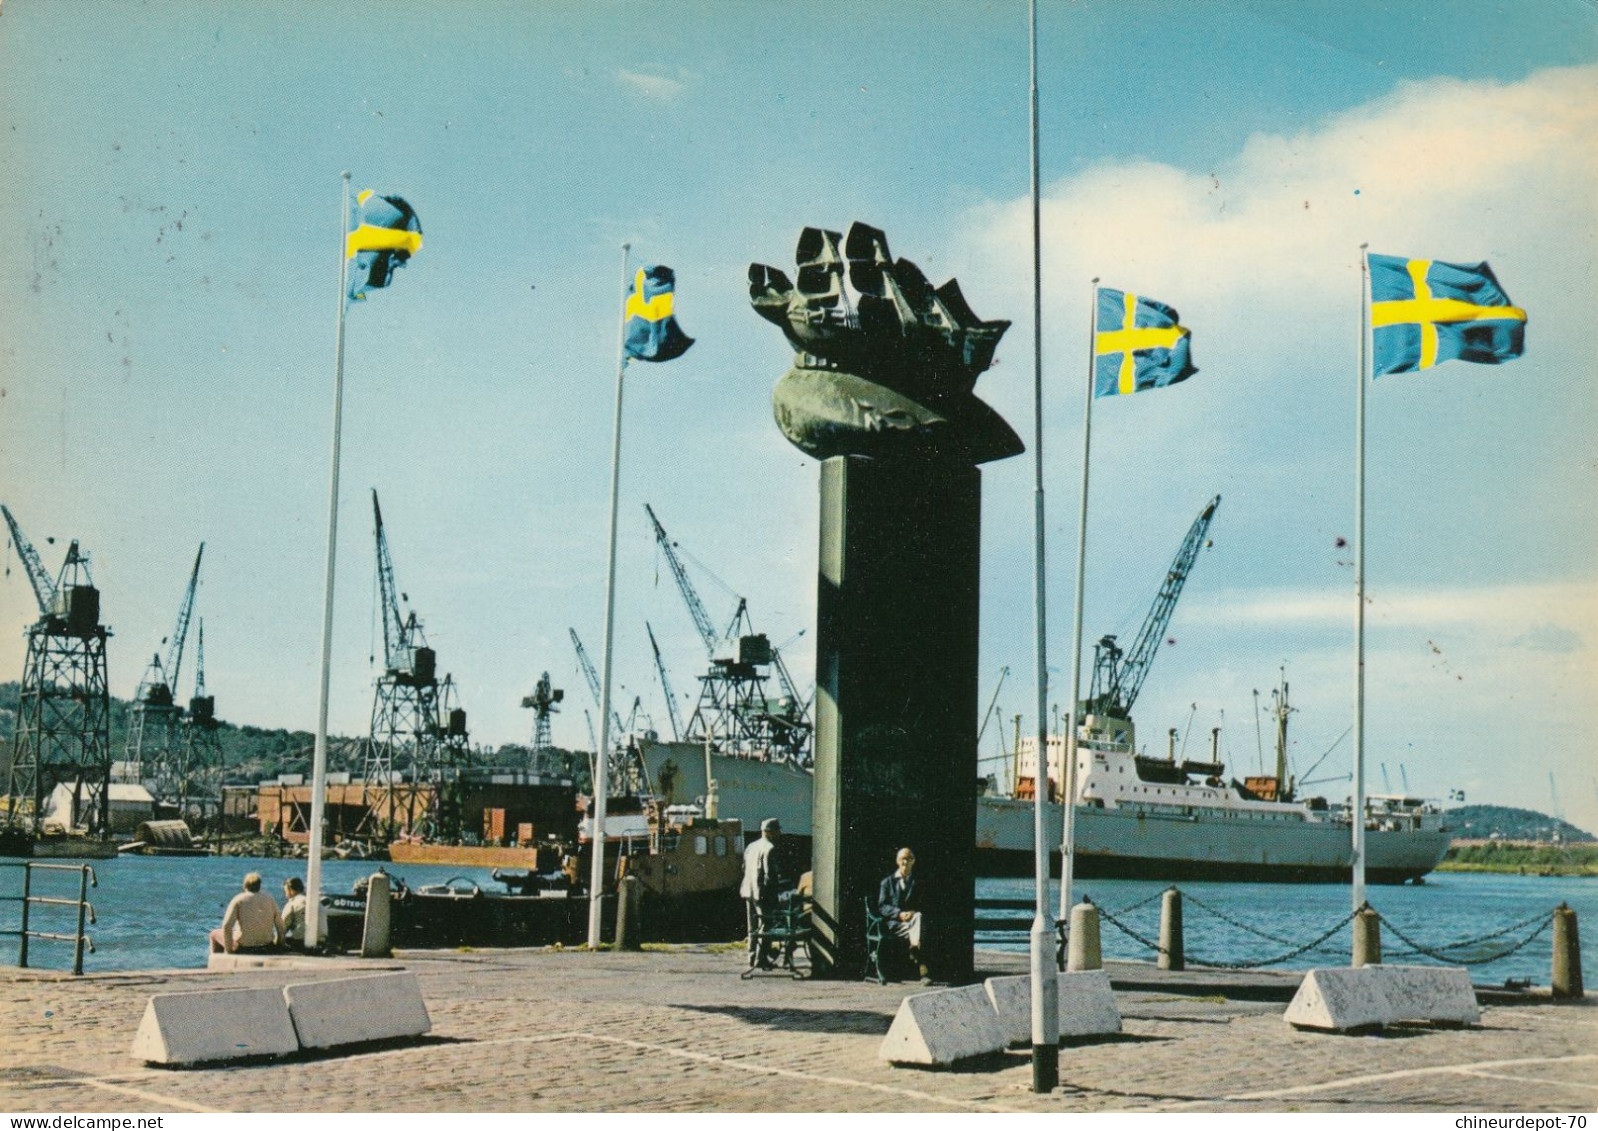 Suède Göteborg Stenpiren Med Monumentet Calmare Nyckel - Sweden